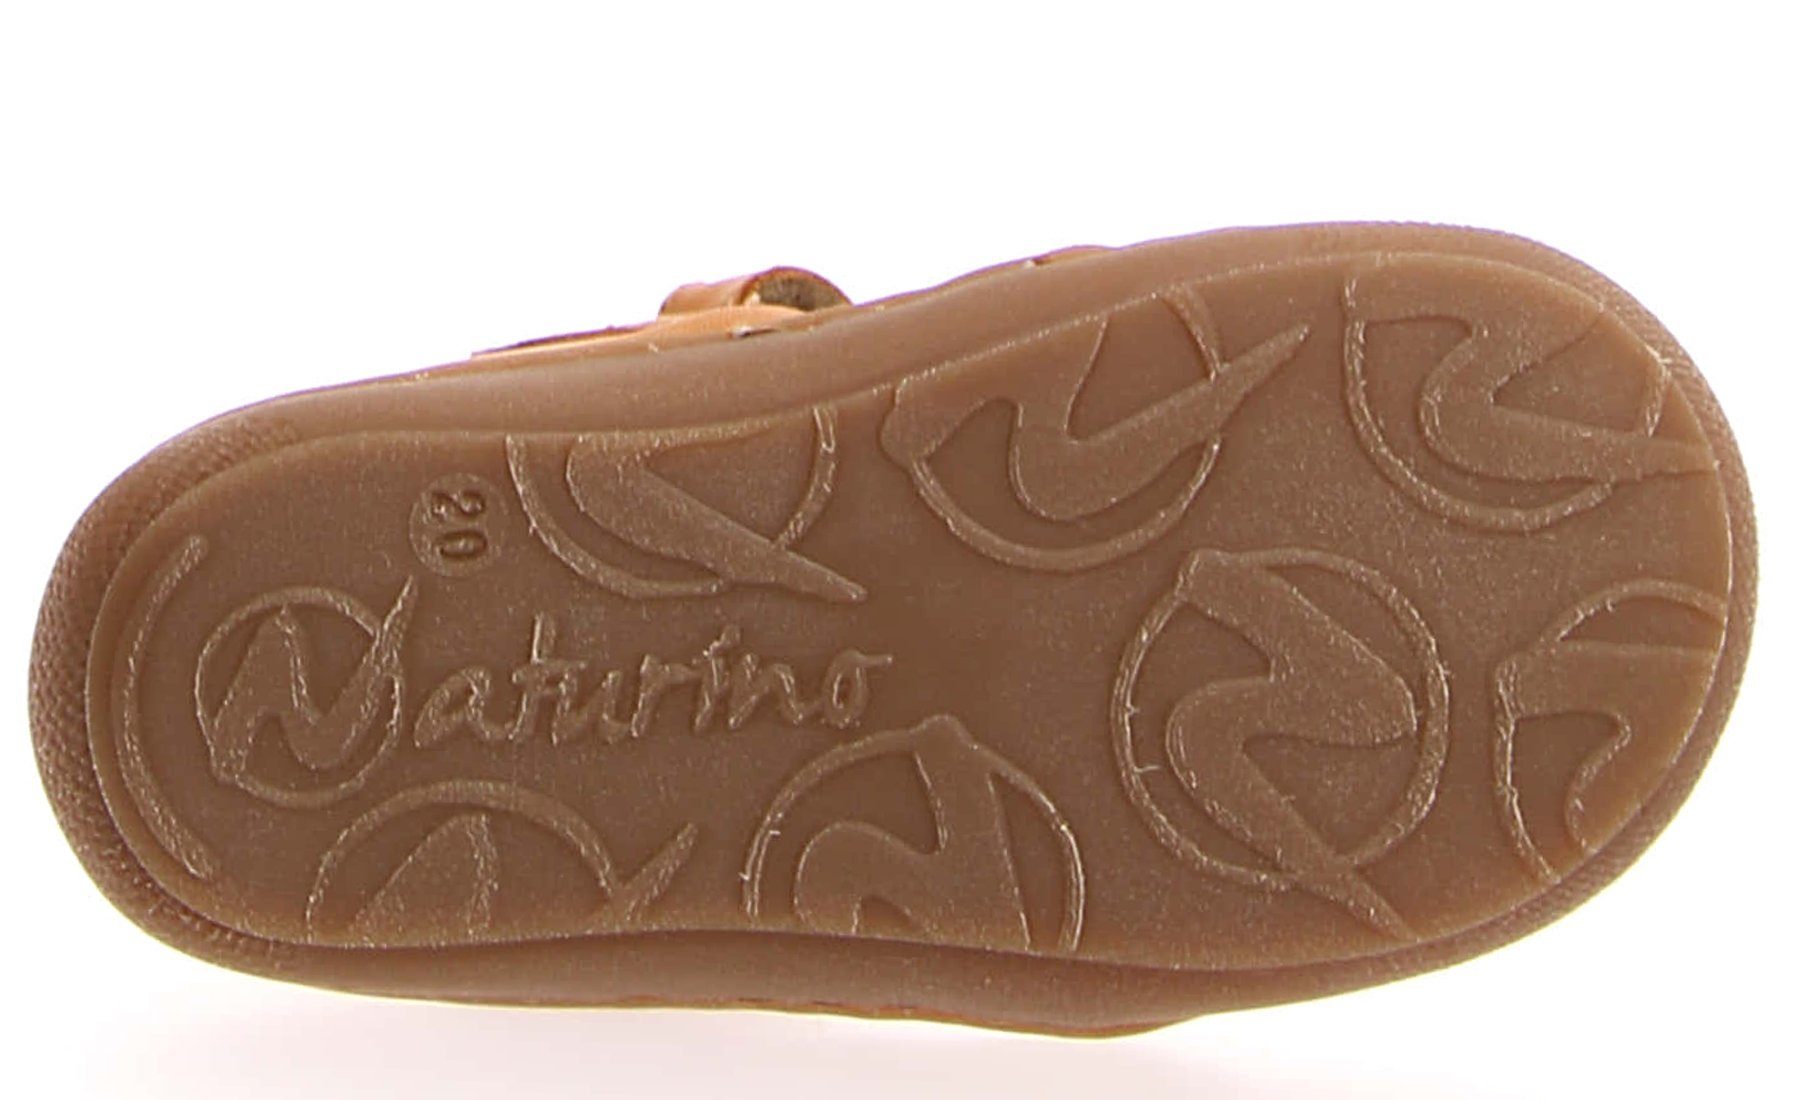 Naturino Naturino Puffy Baby 0G05 Lauflernschuhe Klett Gelb Leder Sandalen Sandalette